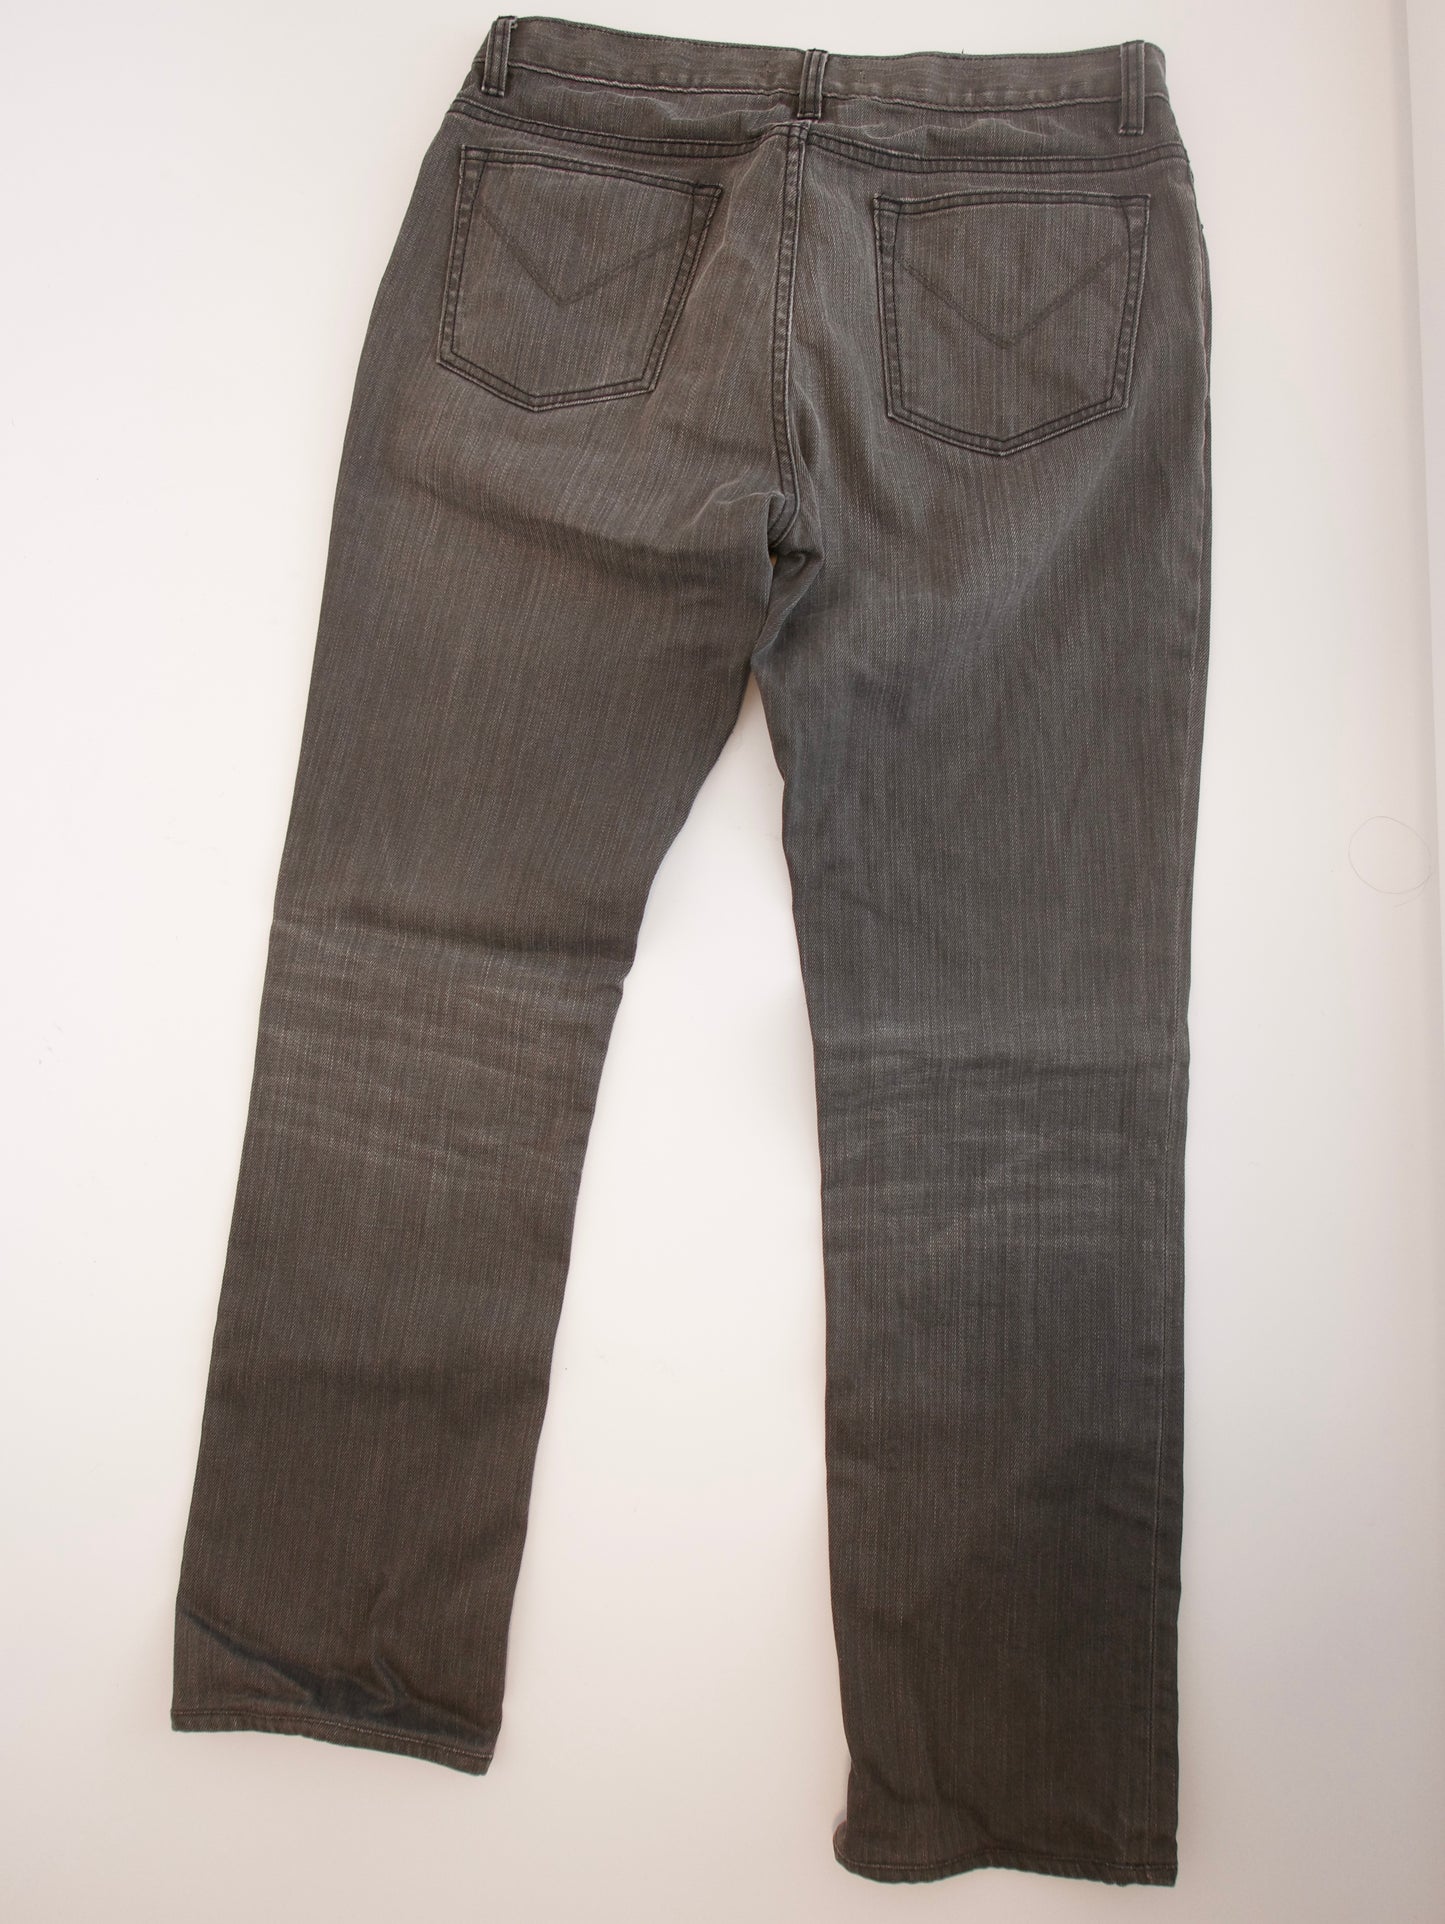 John Varavatos Aged Grey Jeans, Size 34